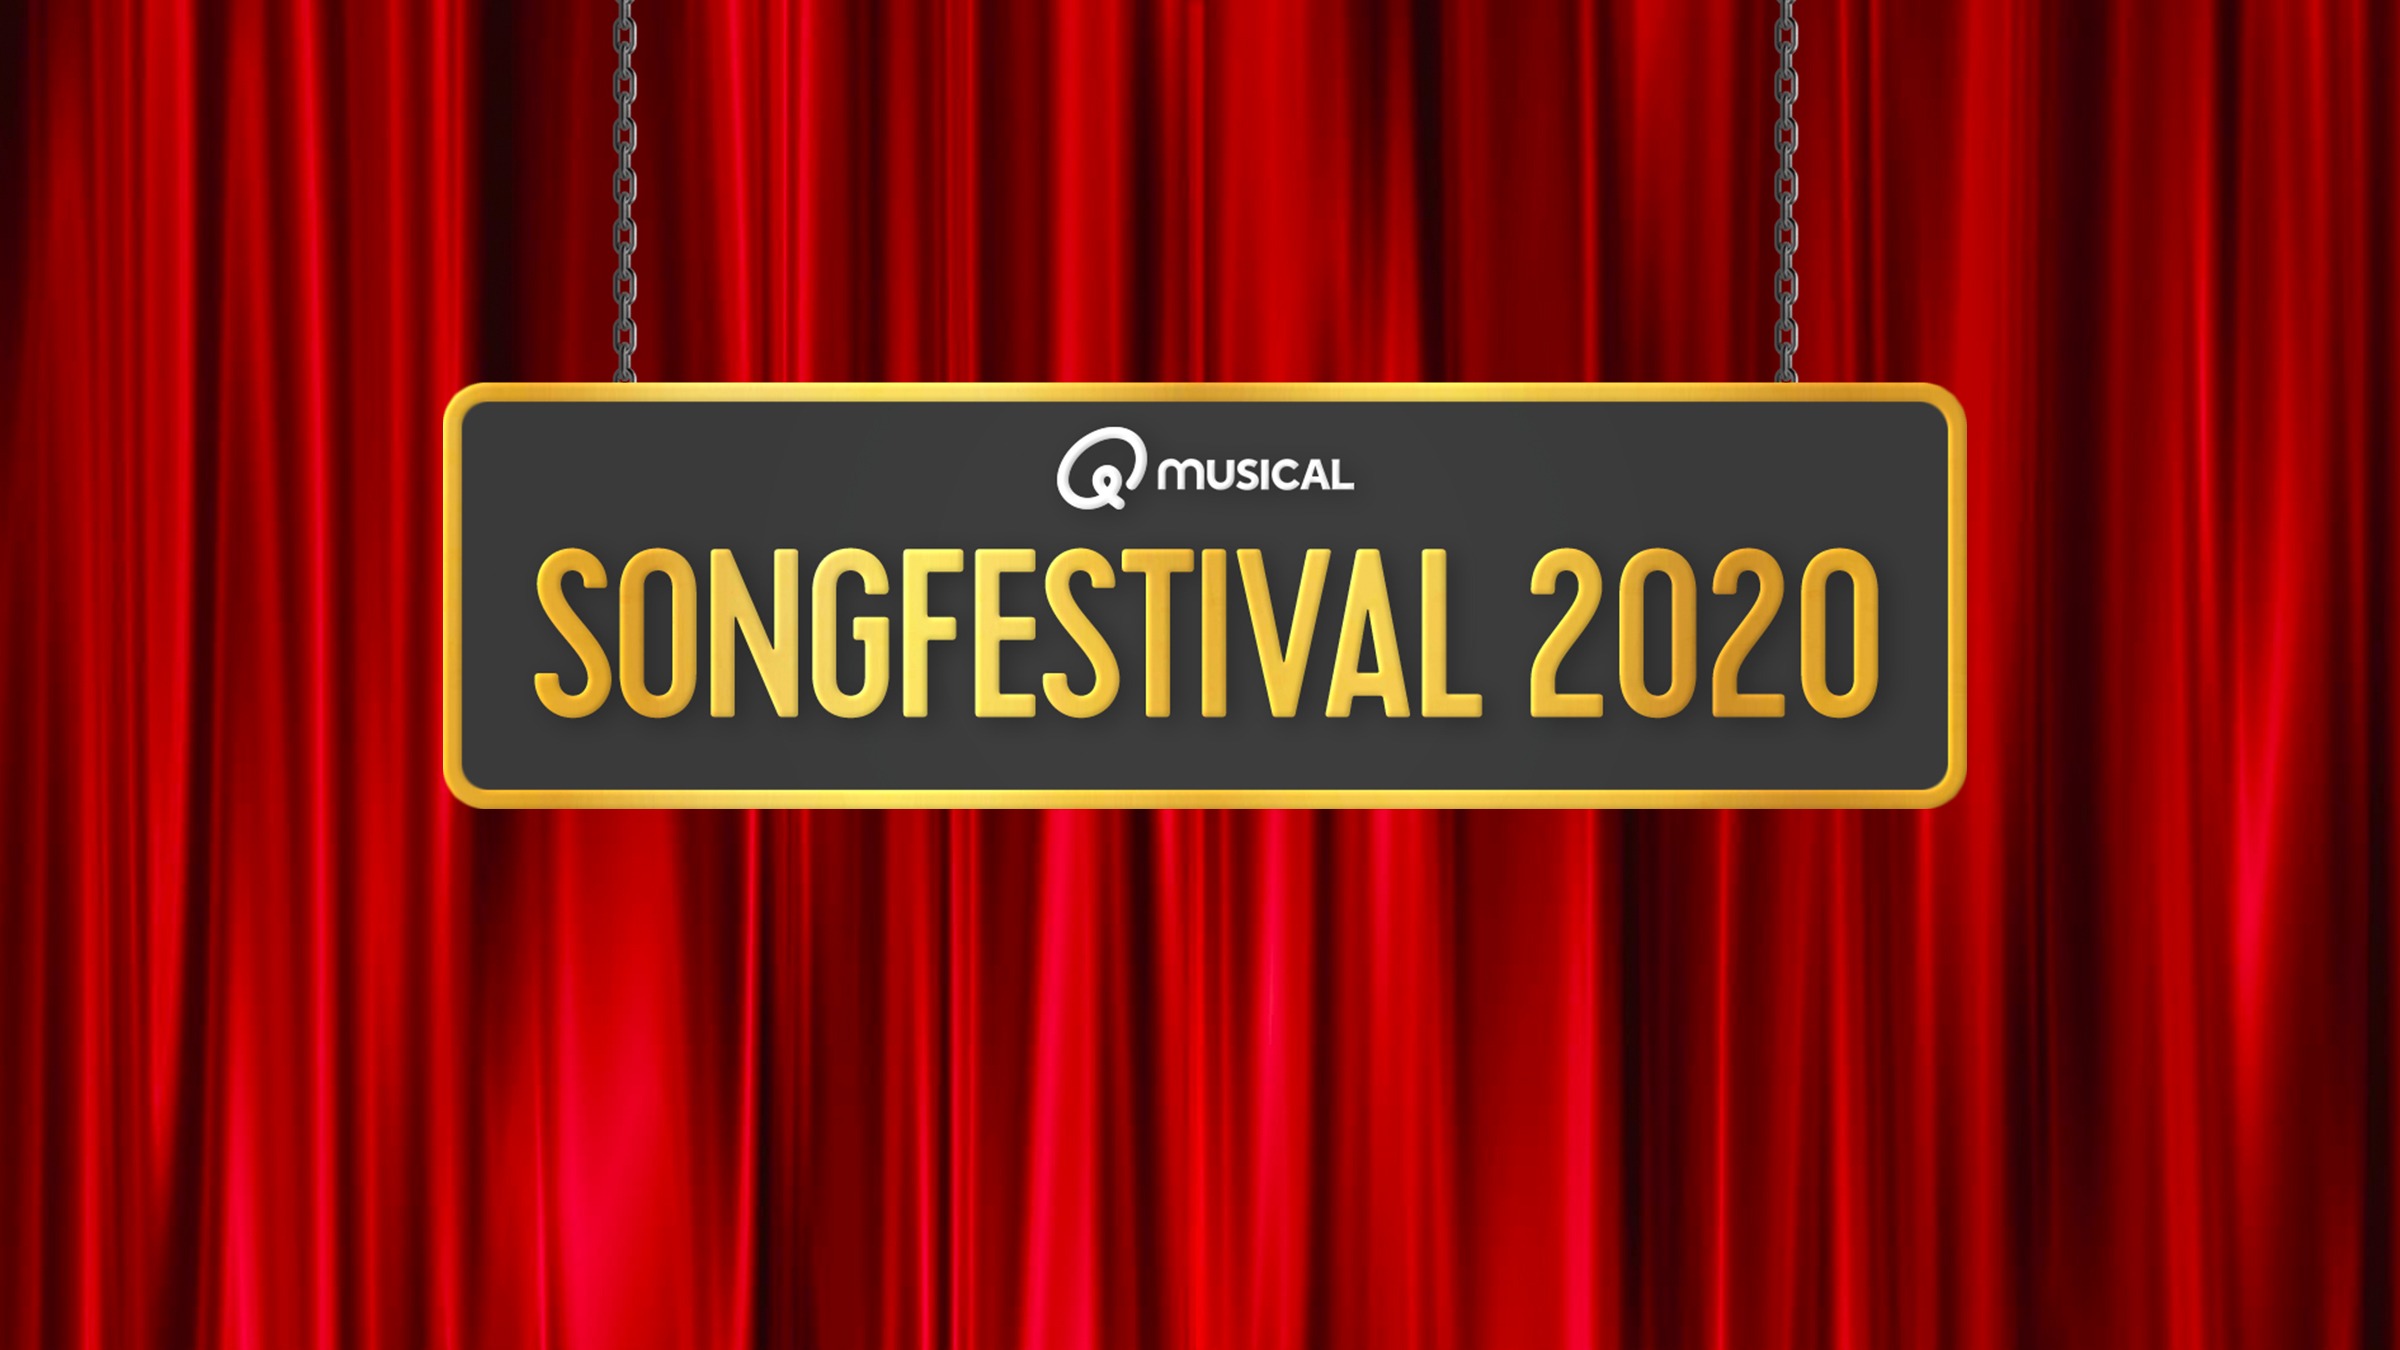 Songfestival 2020